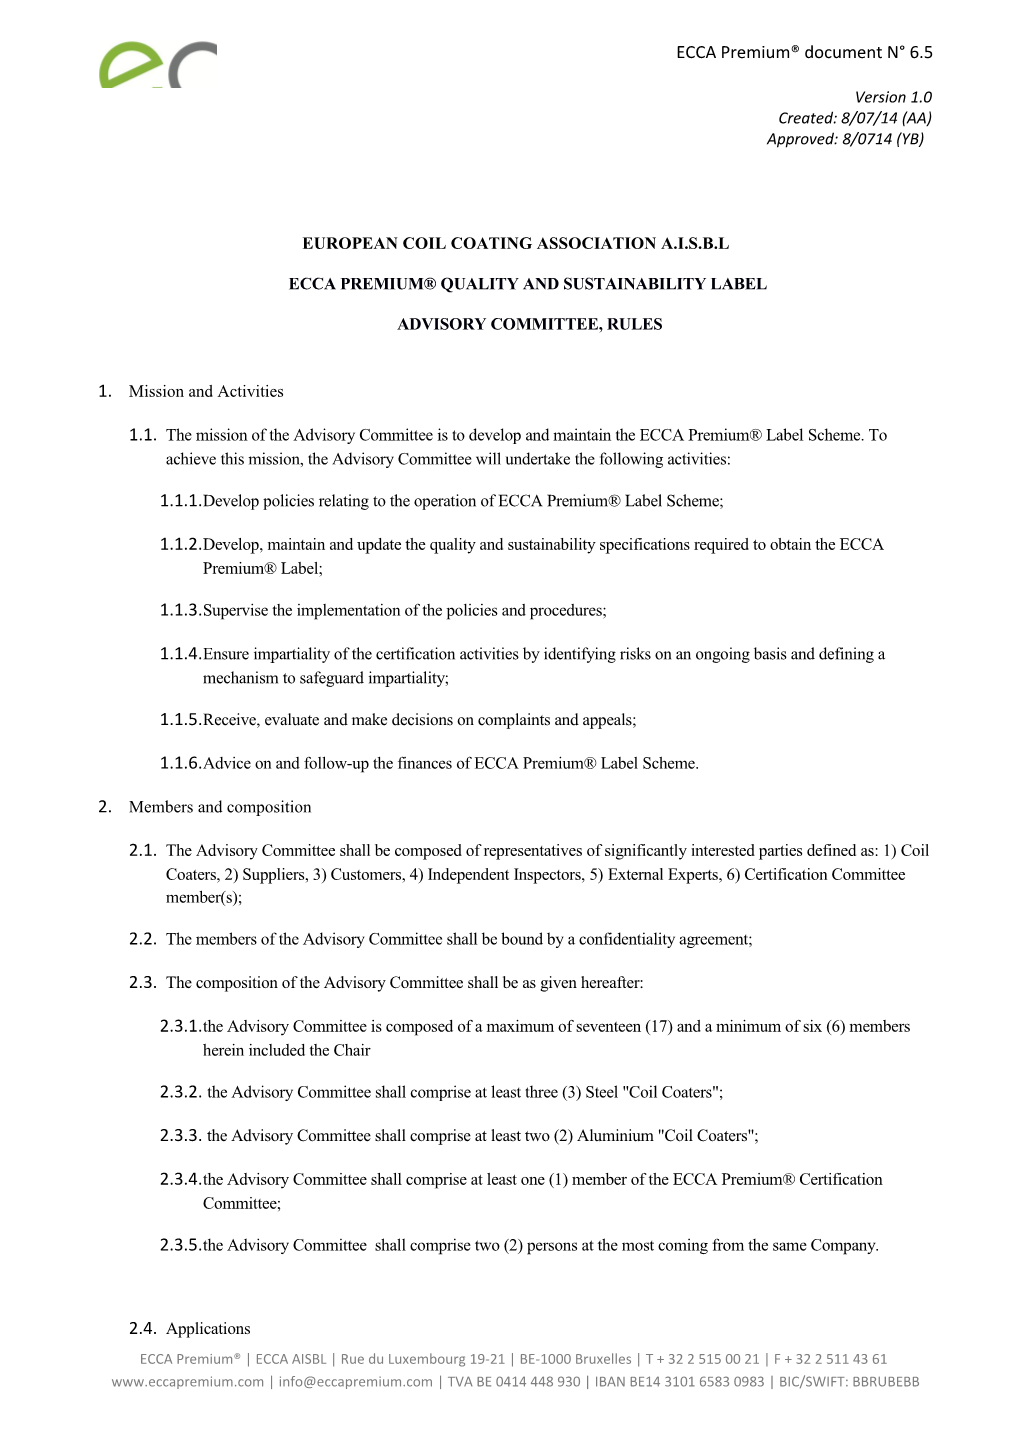 Statutes of the European Coil Coating Association (Ecca) Aisbl